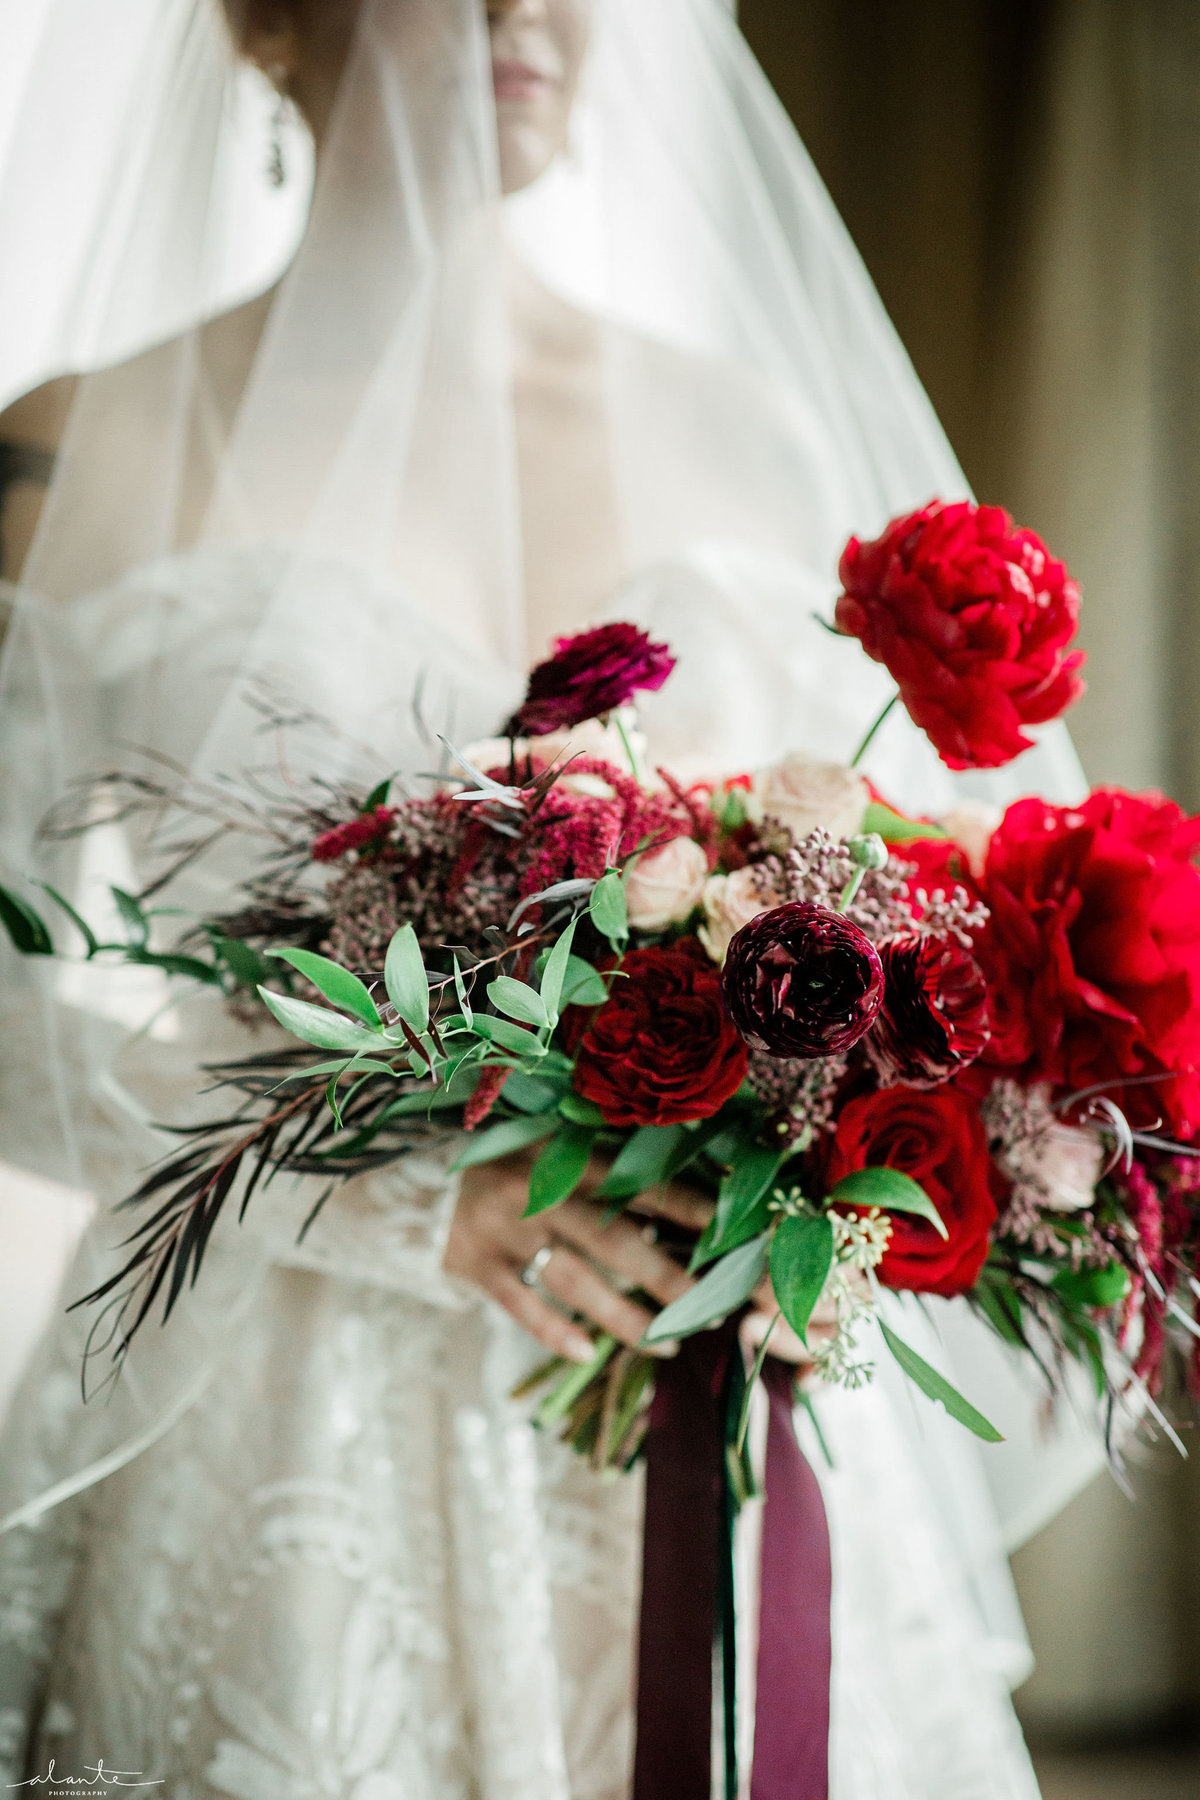 Deep red winter wedding bouquet of burgundy peonies, deep red roses, merlot ranunculus, greenery, and trailing silk ribbon streamers